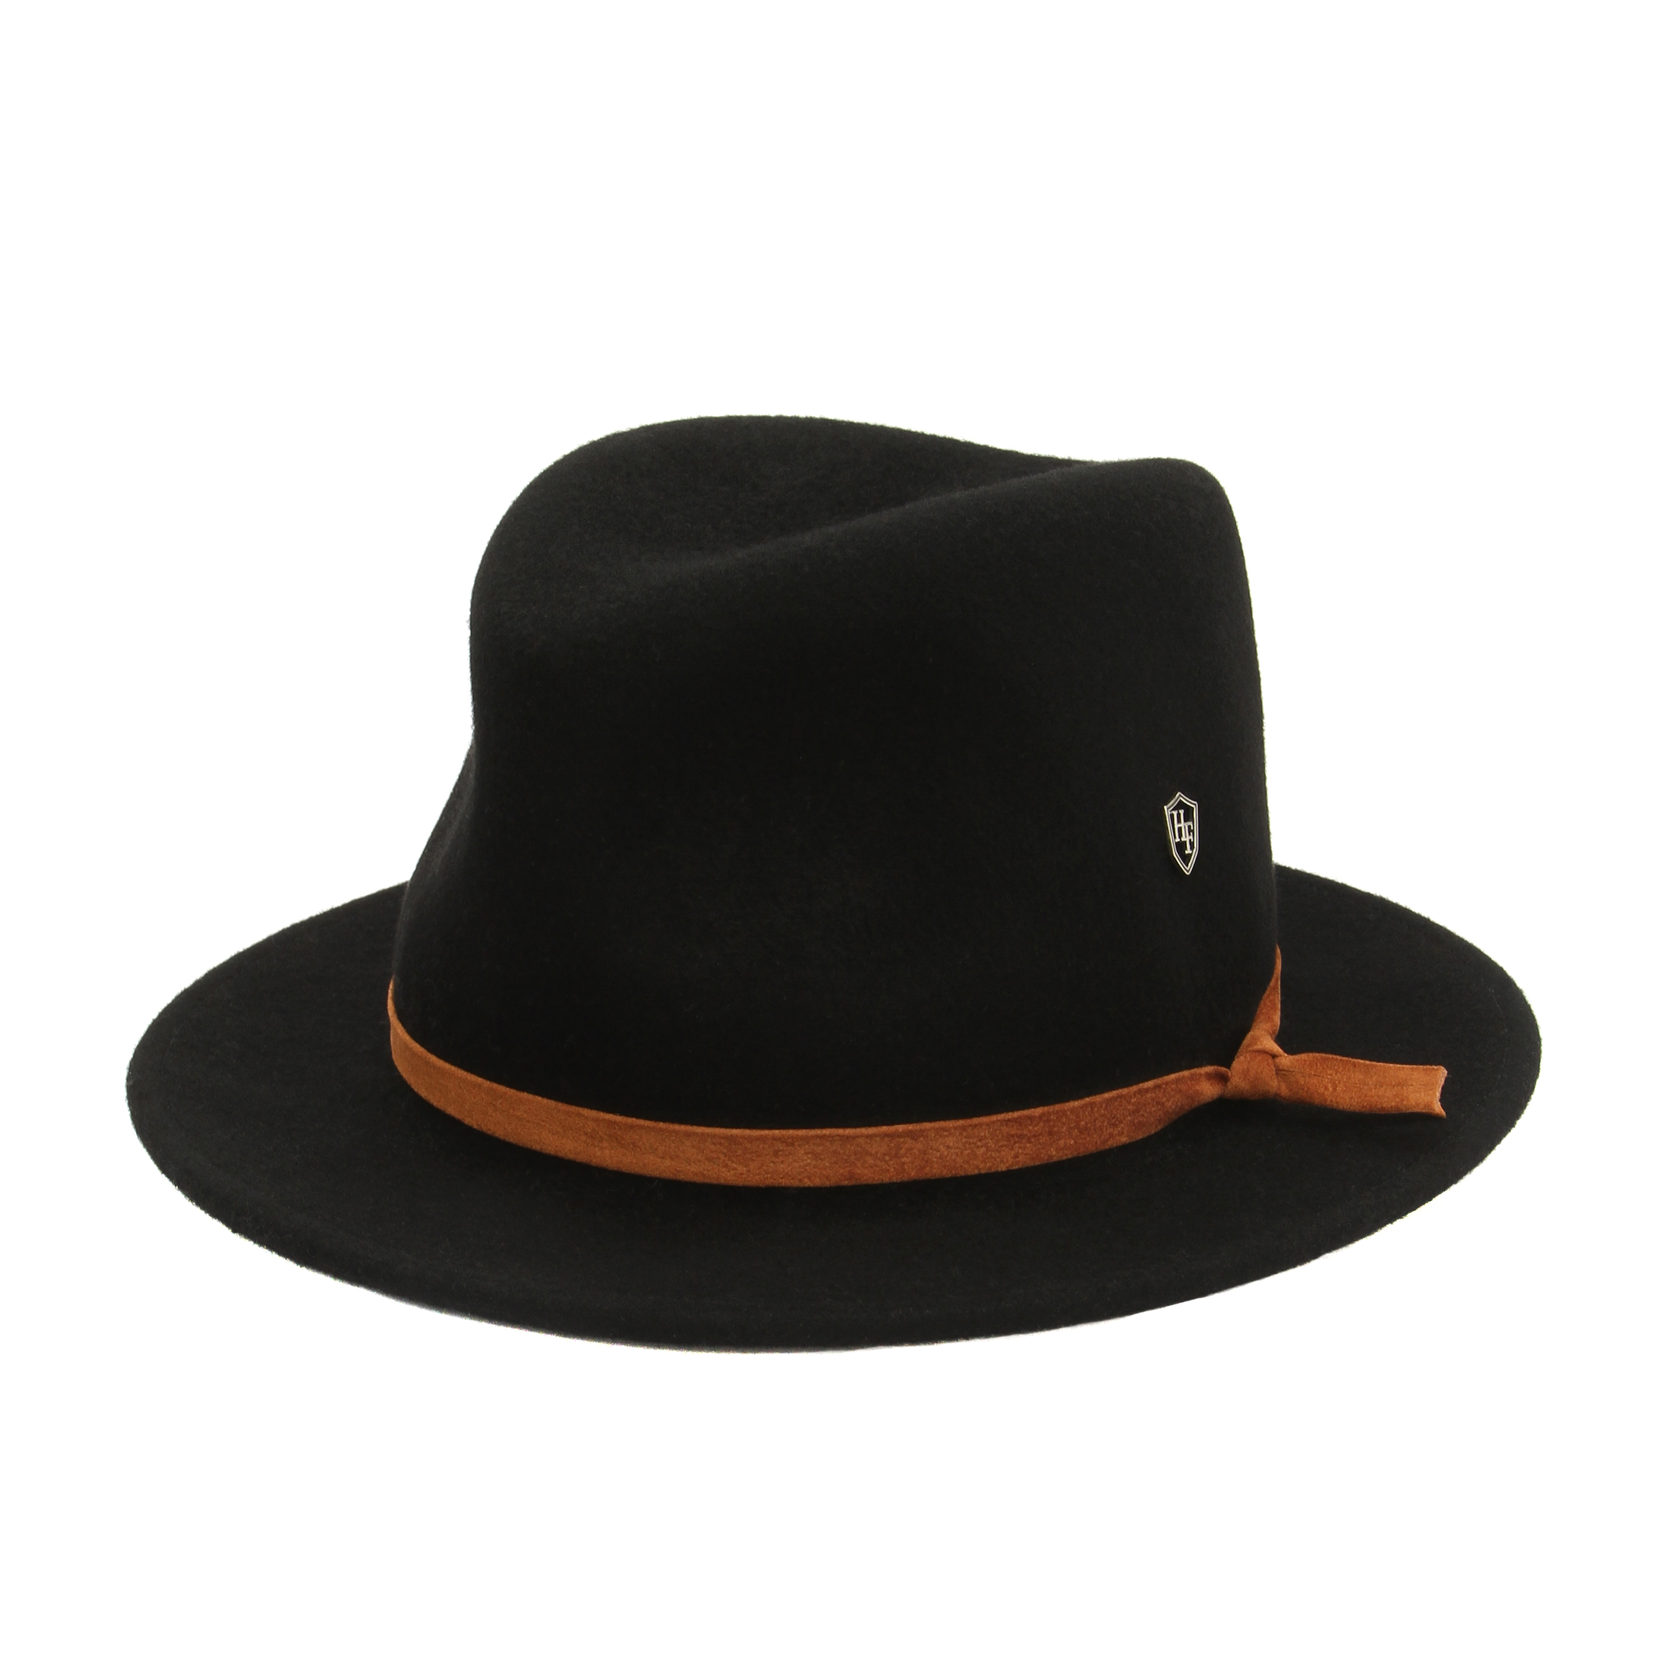 Мужская шляпа Hatfield, 10 тыс. руб. (hatfield.ru)